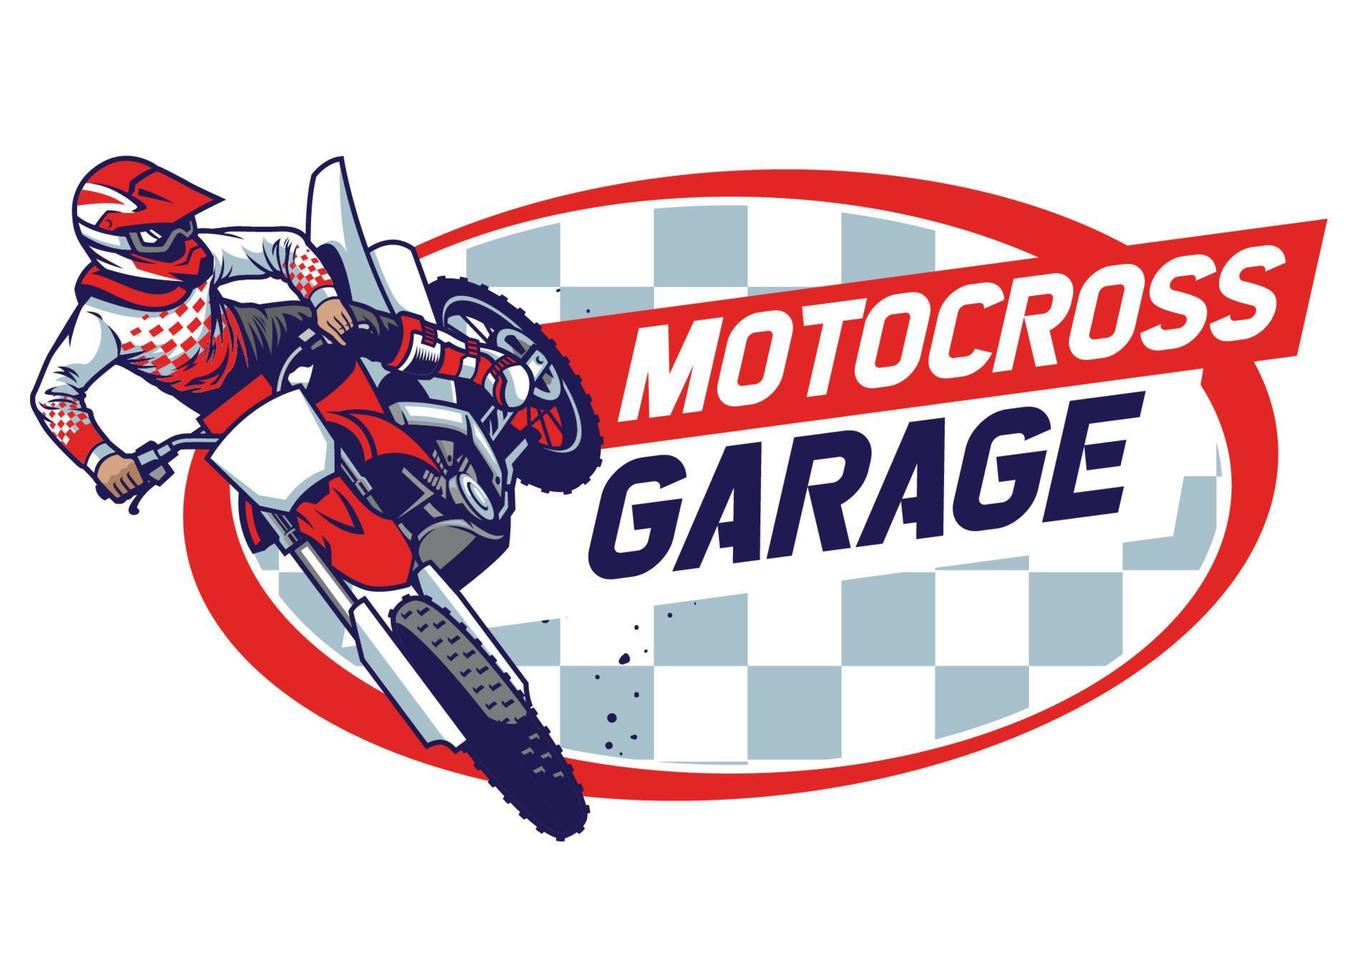 jumping motocross badge design vector